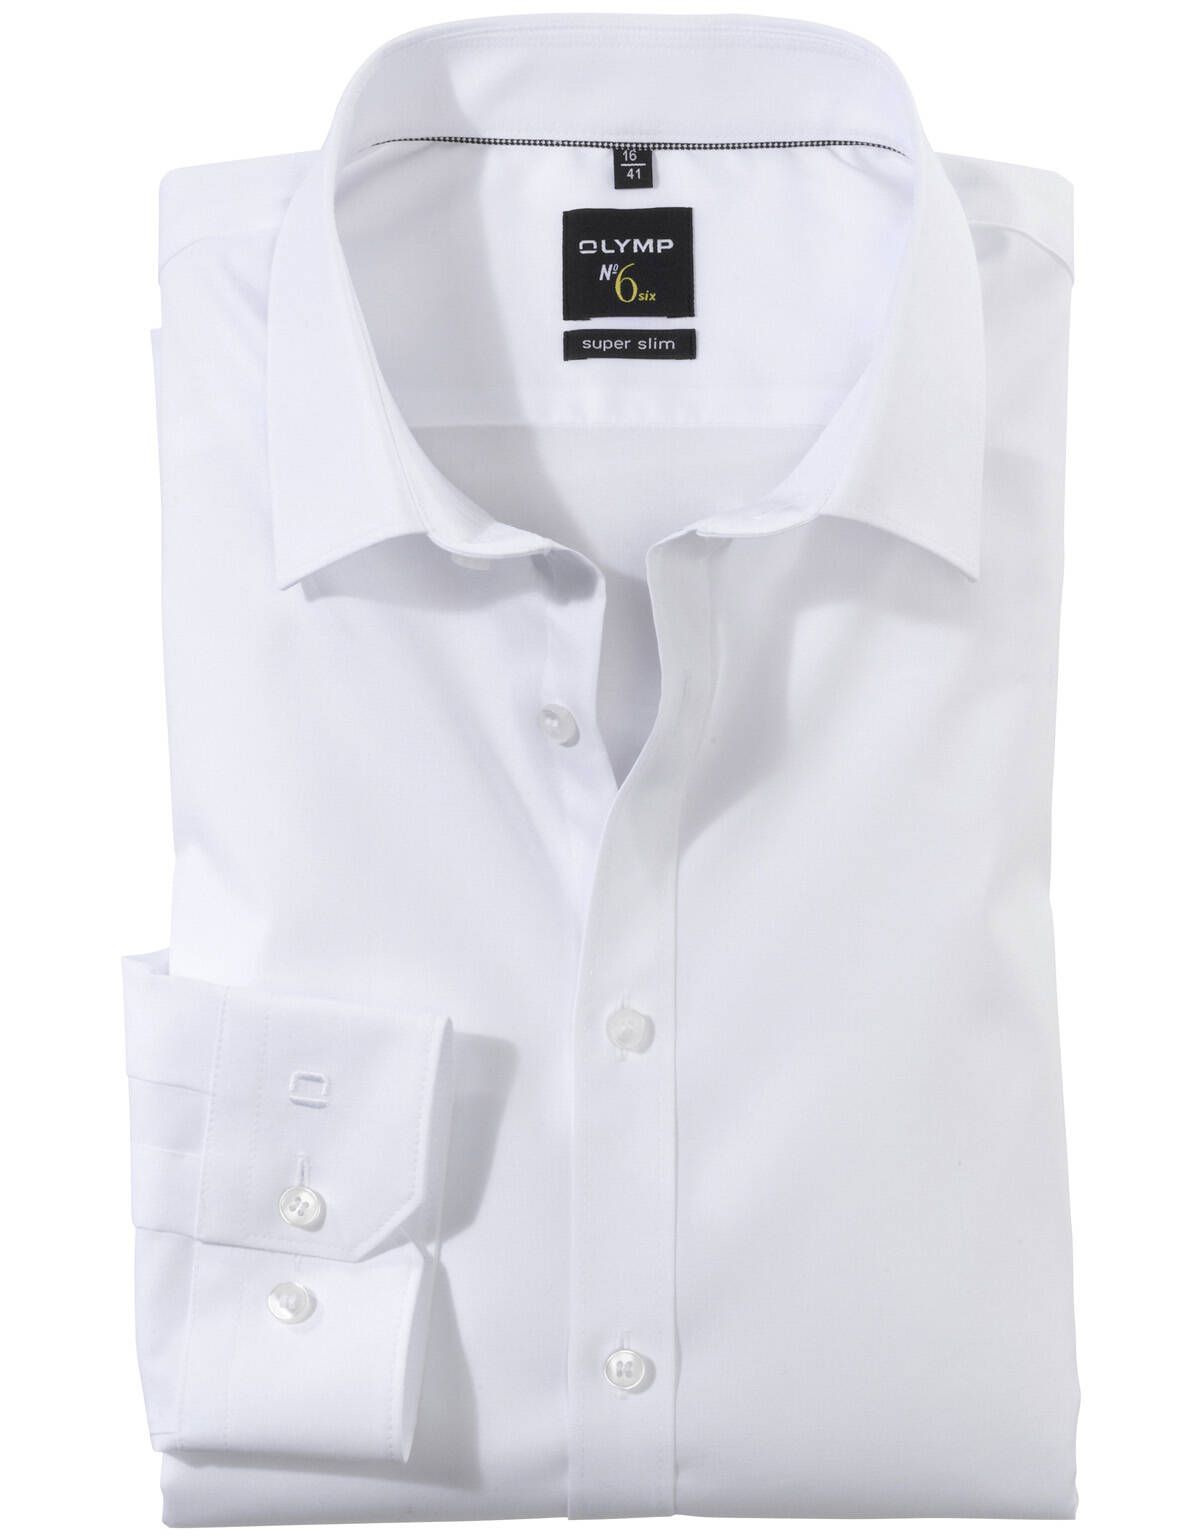 Рубашка OLYMP №6 супер слим на рост выше 186[Белый]